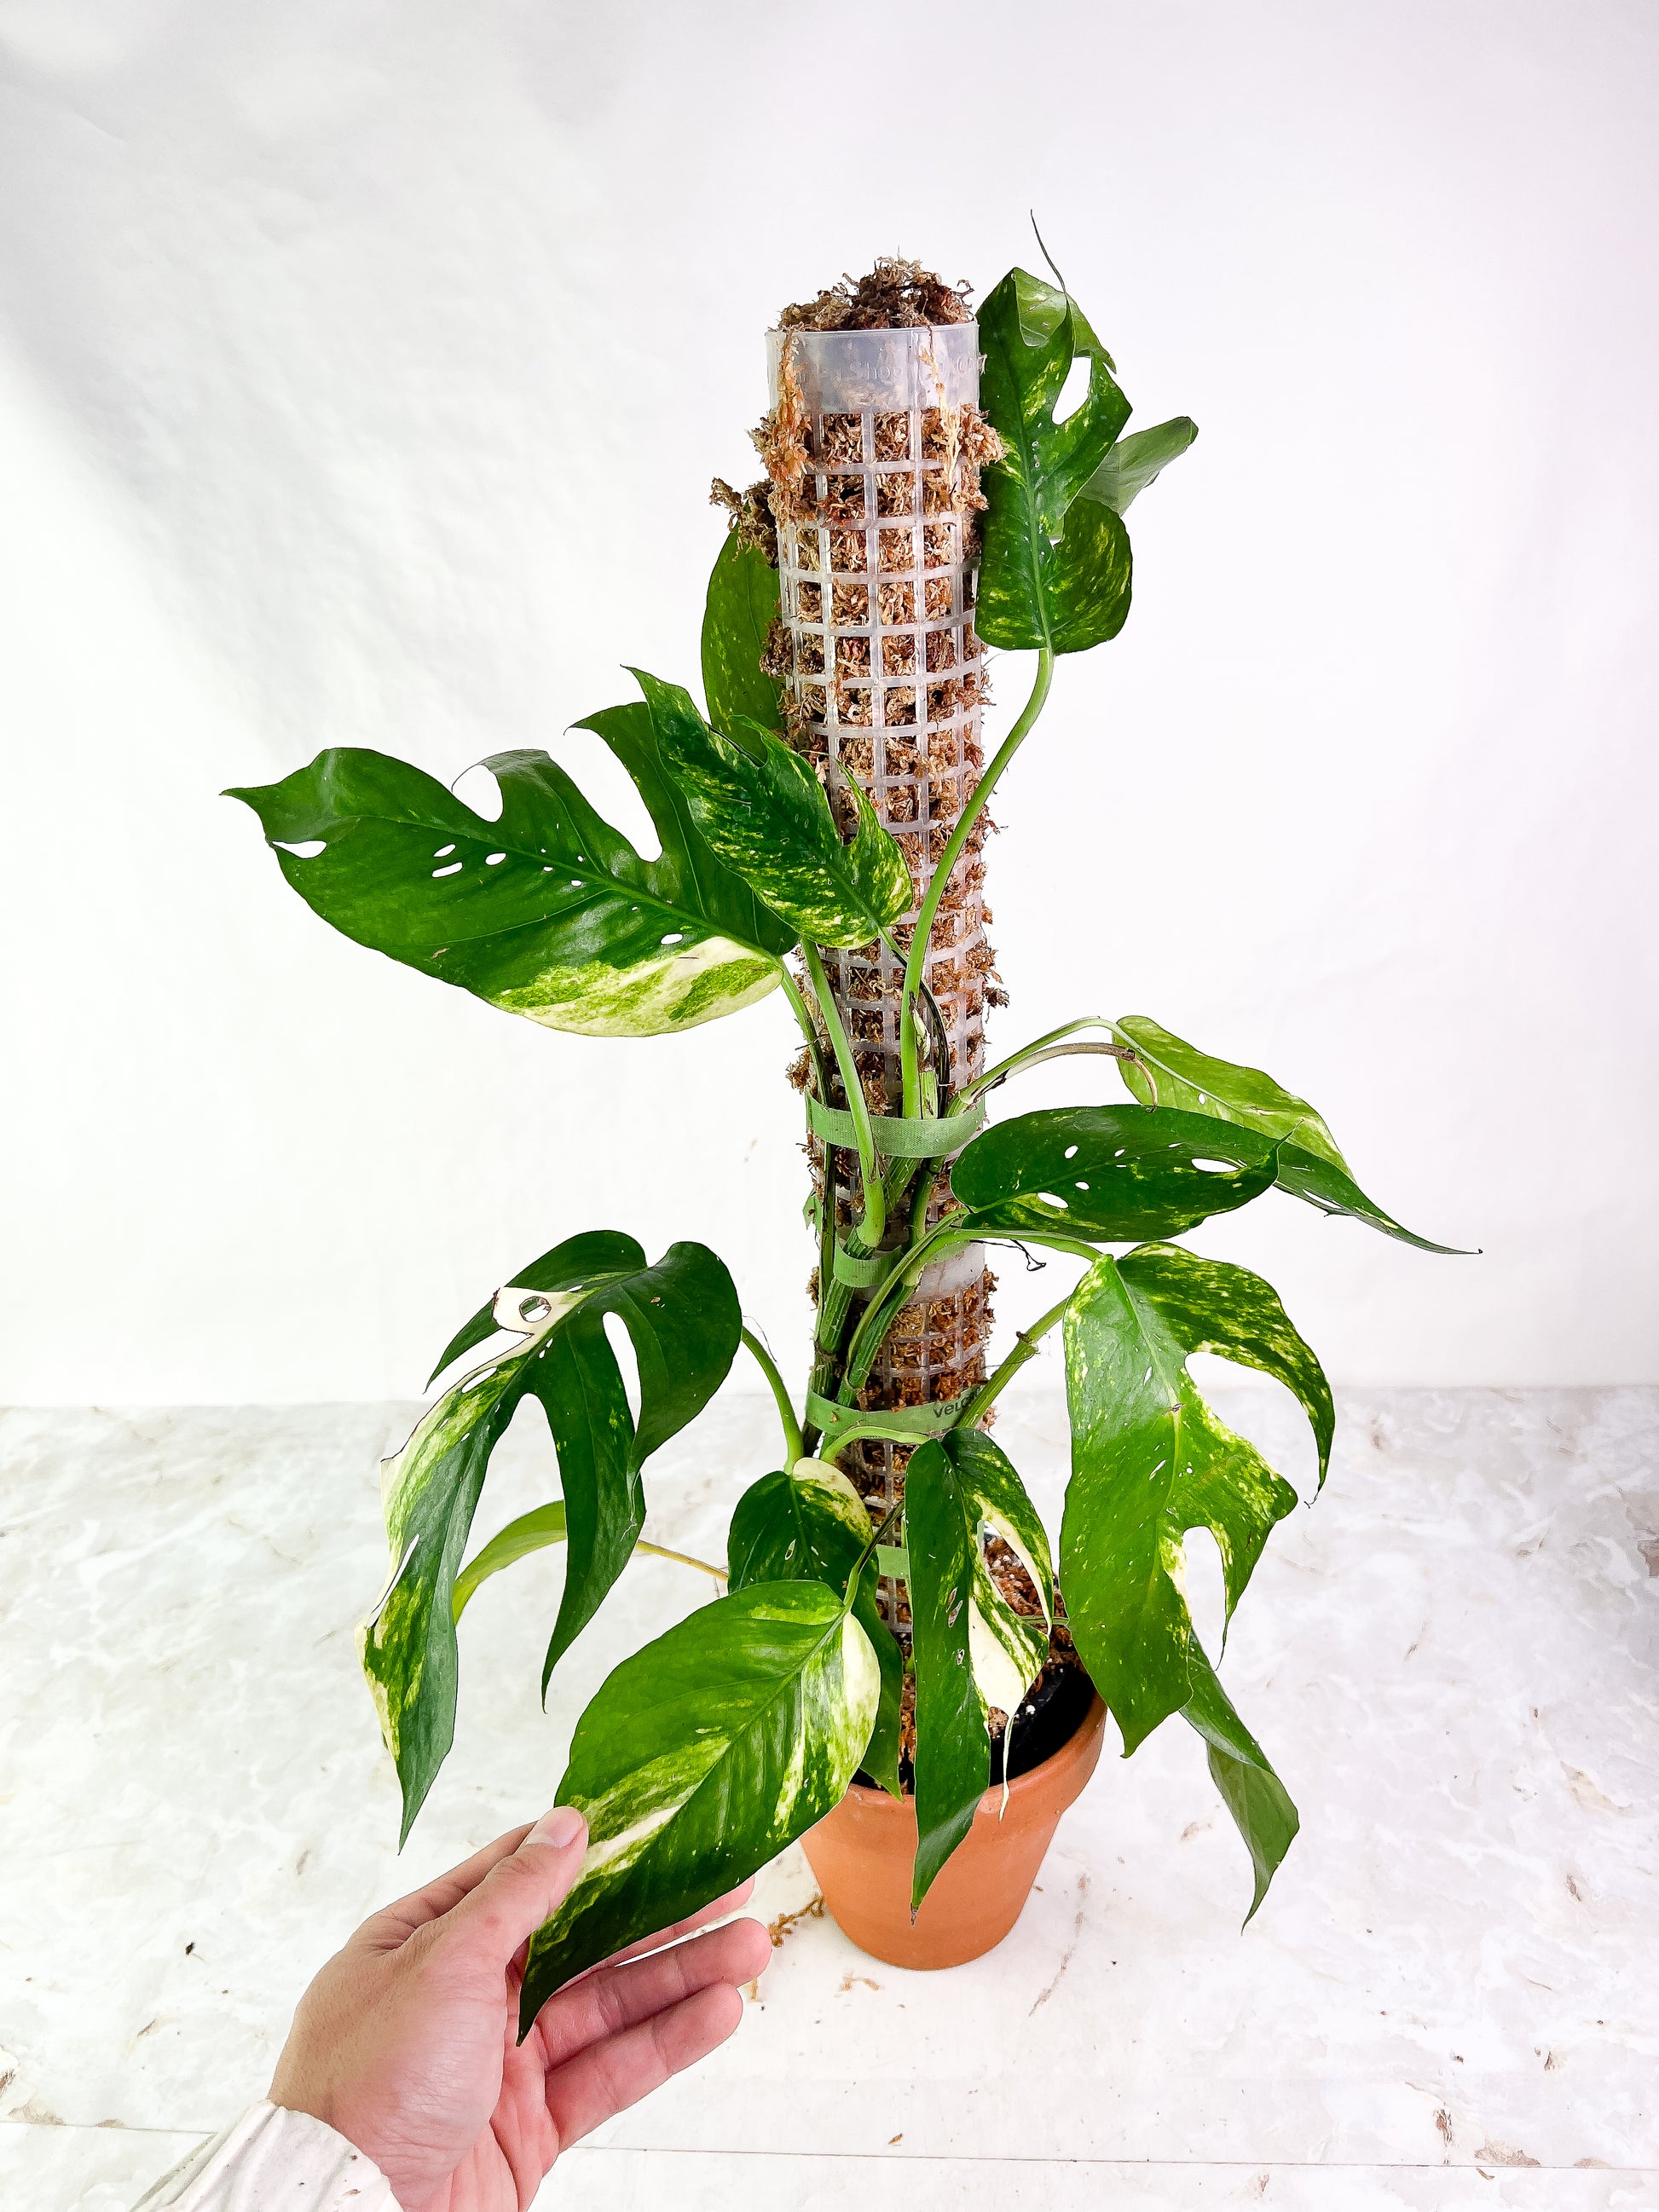 MATURE Epipremnum Pinnatum Kujang Gold Flame (Actual Plant First Pics)